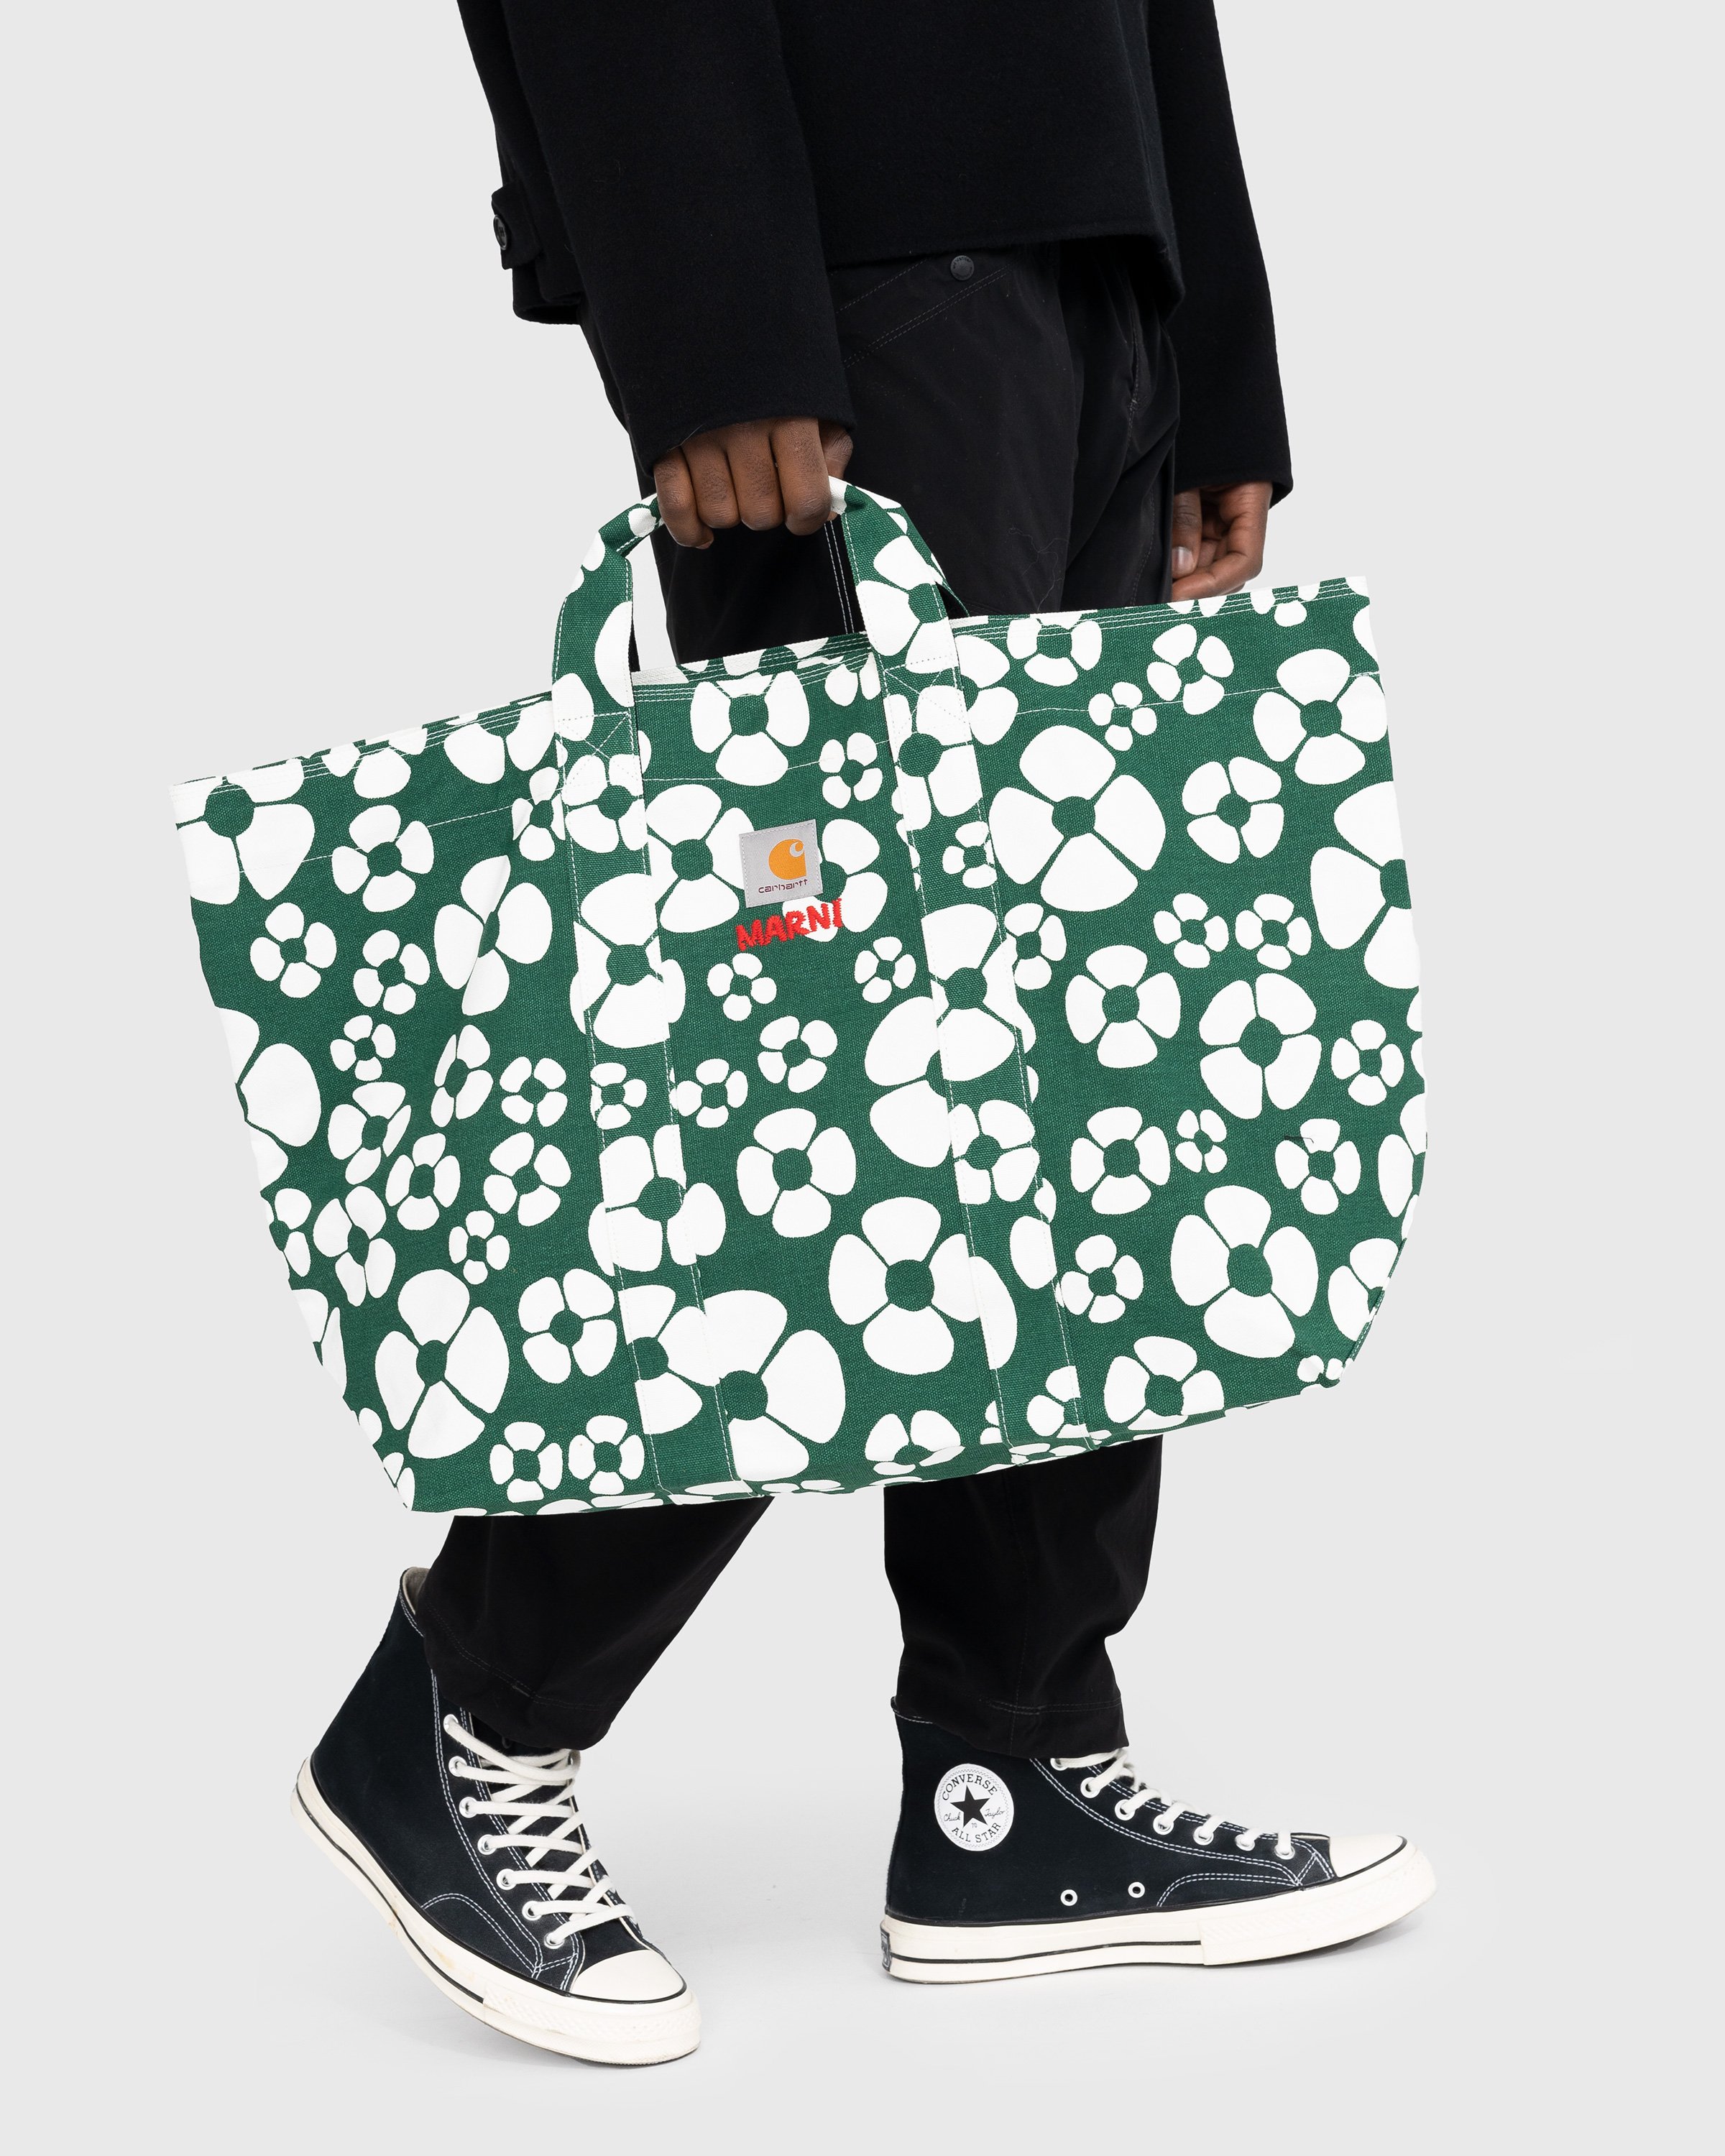 Marni x Carhartt WIP - Floral Shopper Tote Green - Accessories - Green - Image 3